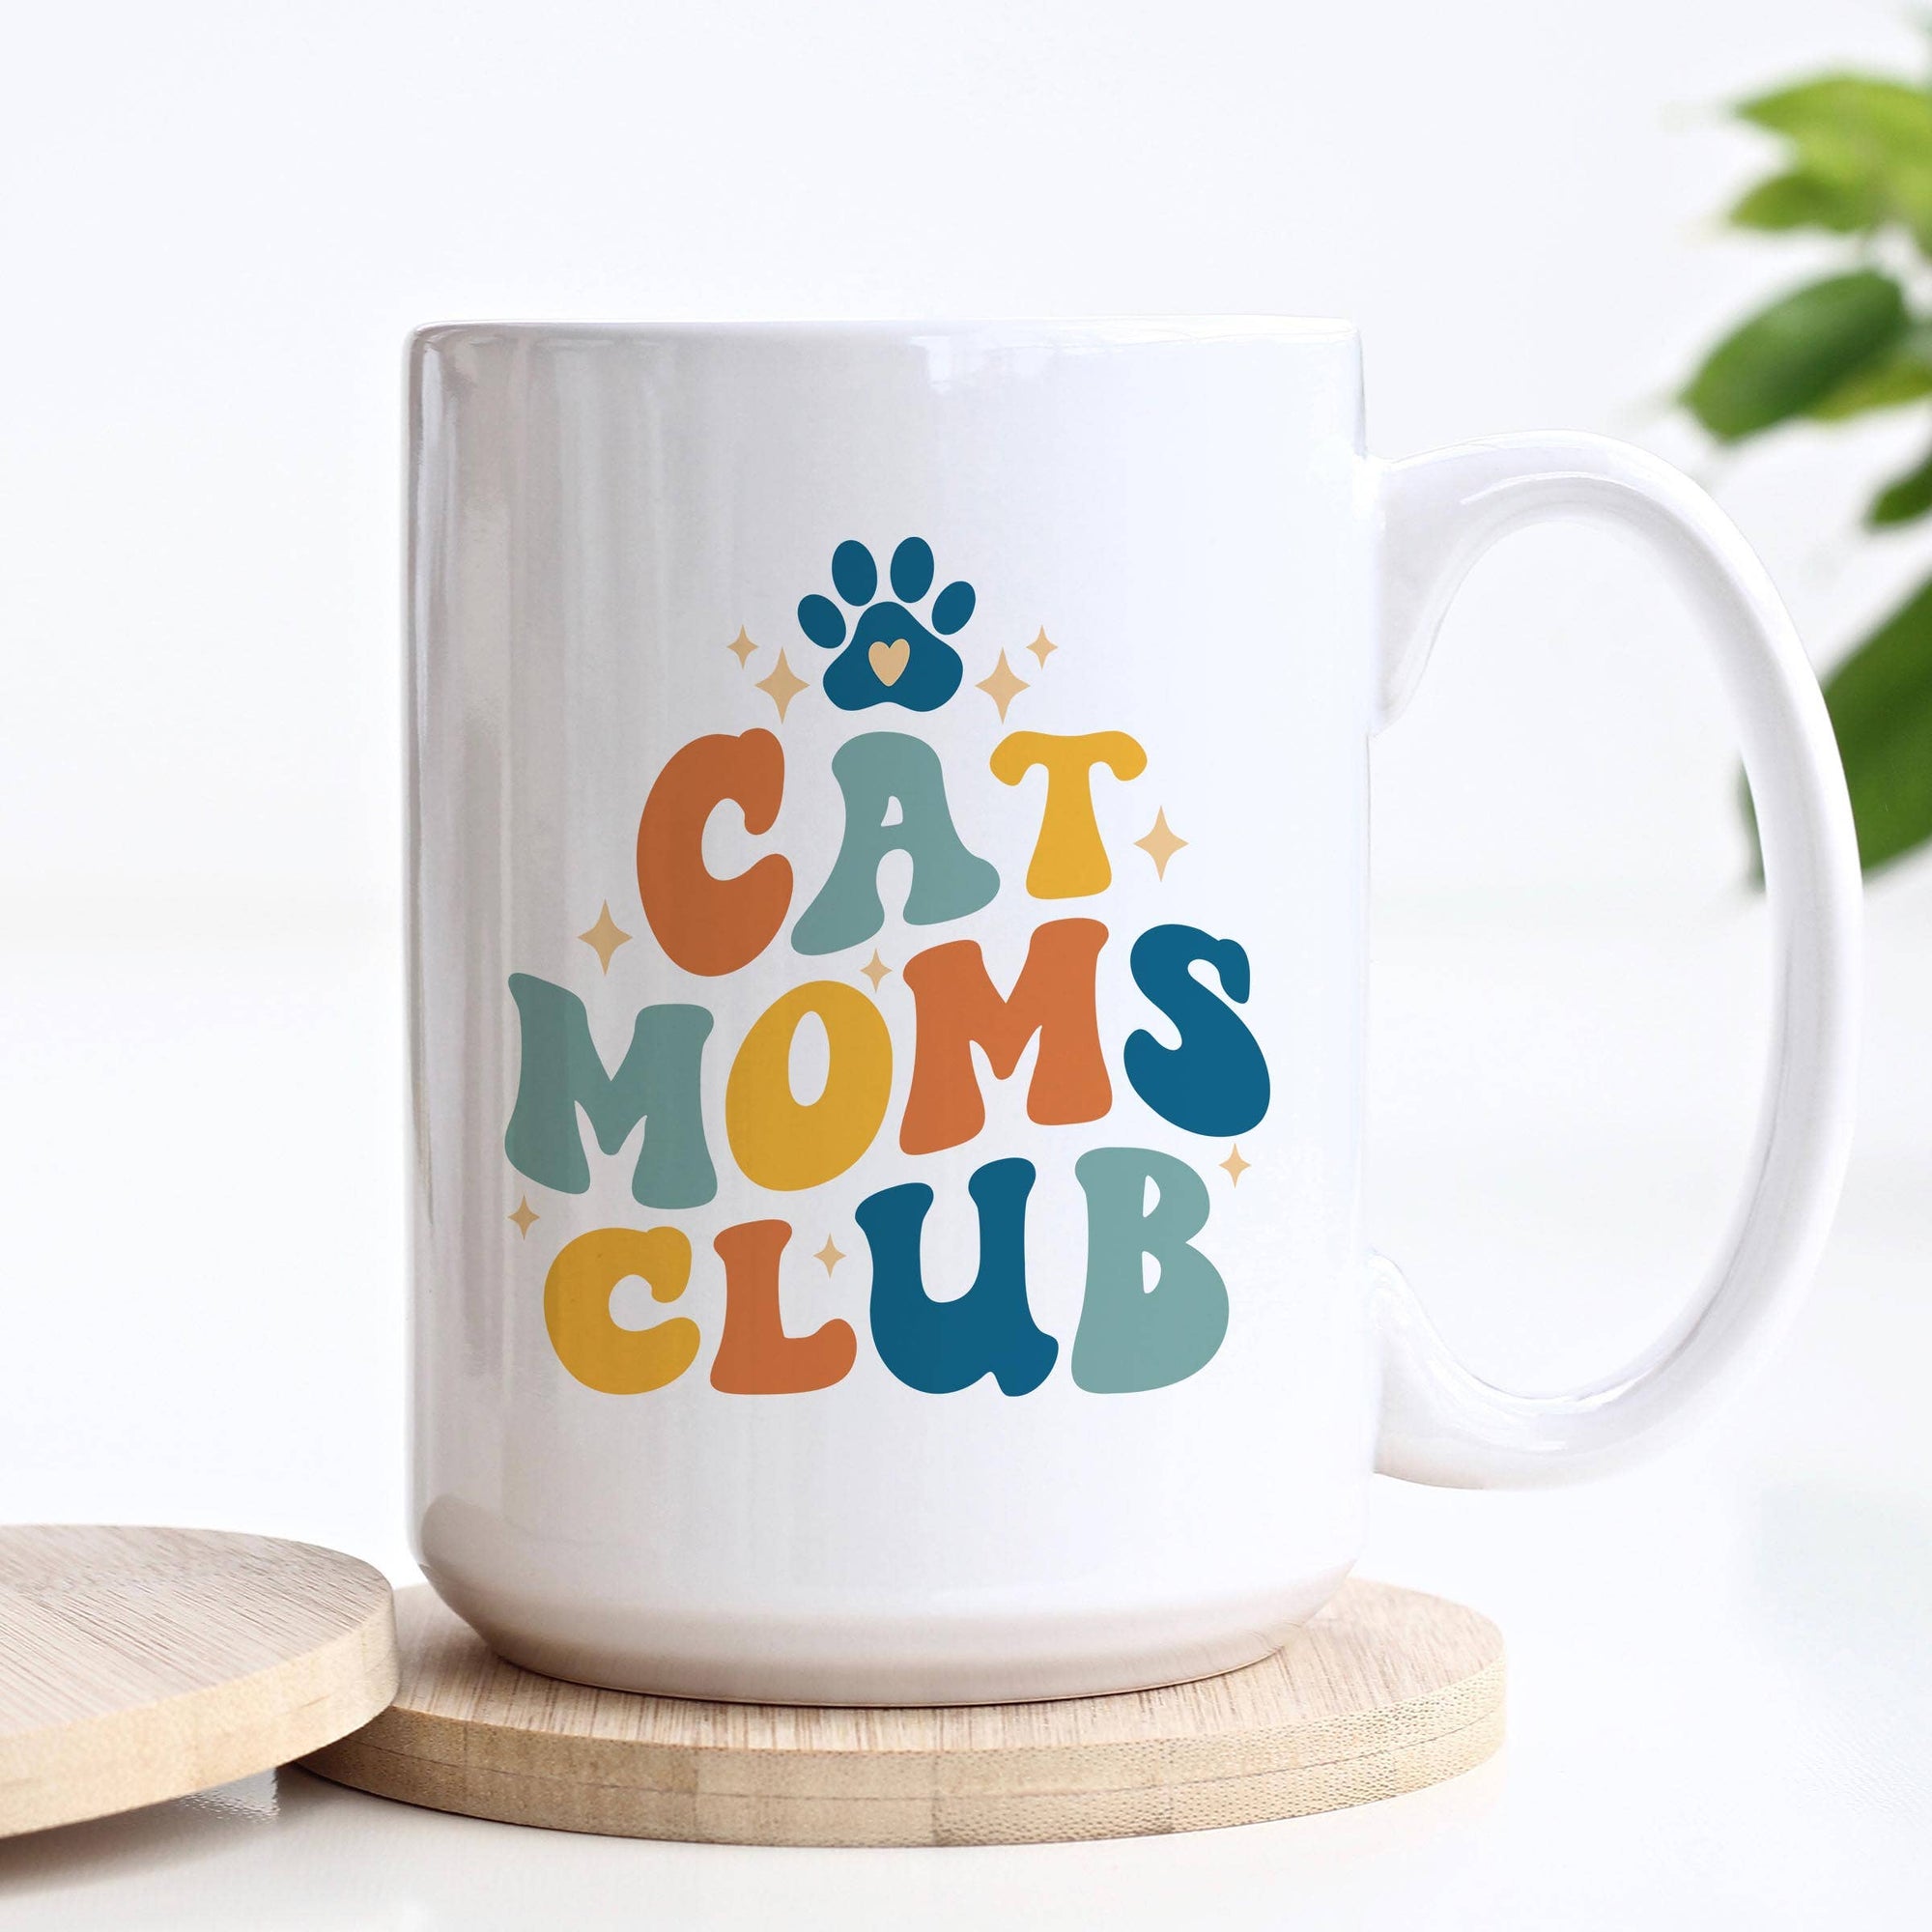 Cat Moms Club Ceramic Mug, Coffee Cup, Funny Cat Mom Gift: 11oz